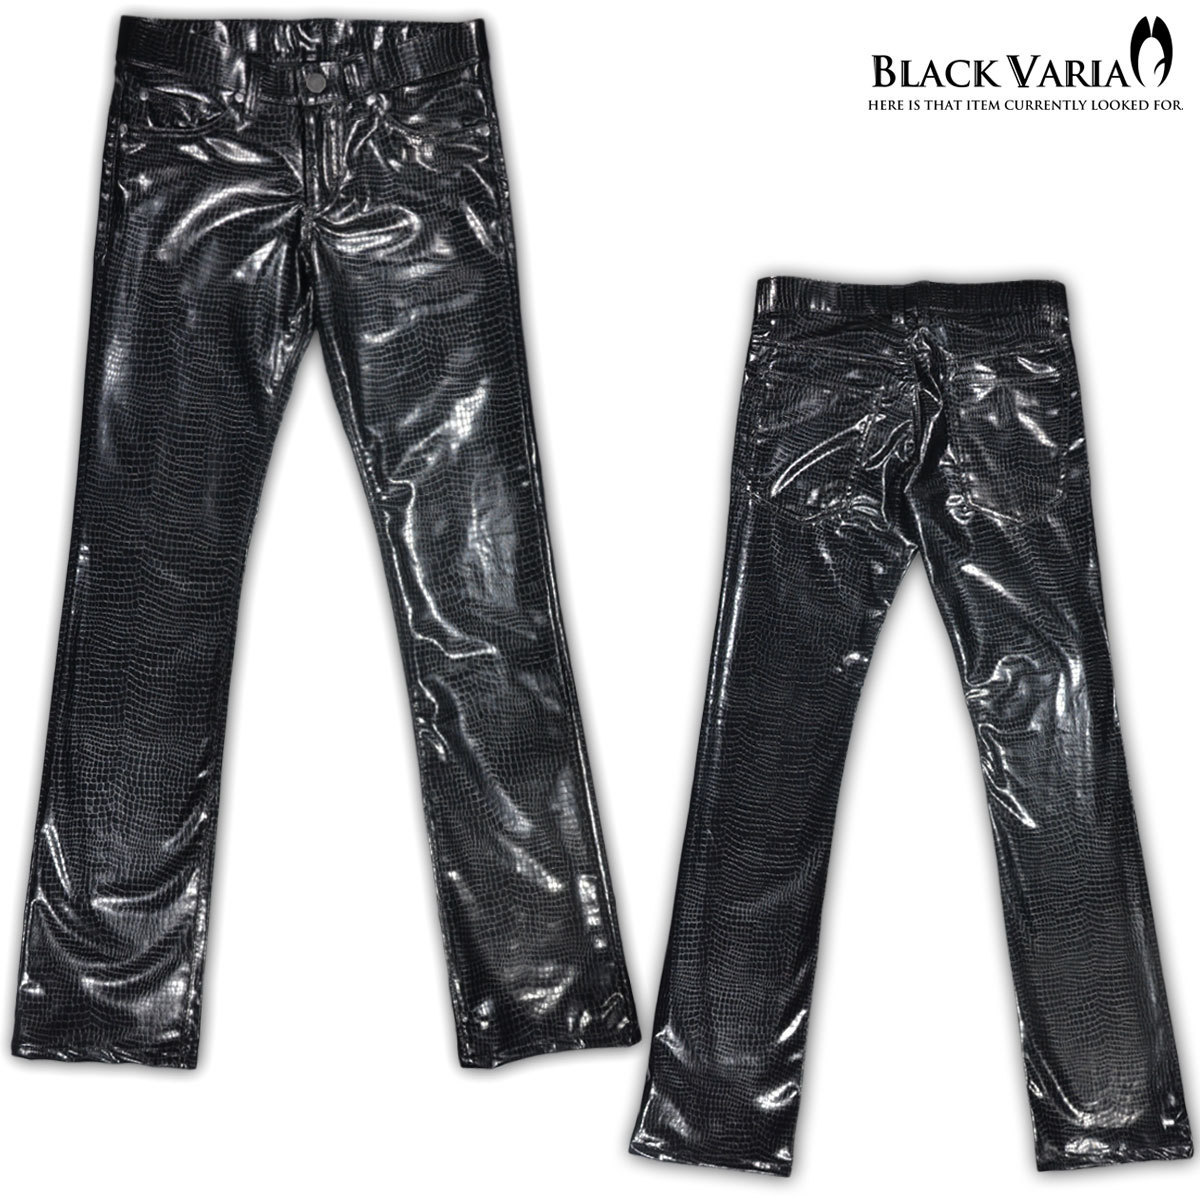 0#933155-bk BLACK VARIA PUレザー 型押しクロコ柄 光沢 合皮 革 ブーツカットパンツ メンズ(ブラック黒) M30 ローライズ パーティー 派手_画像4